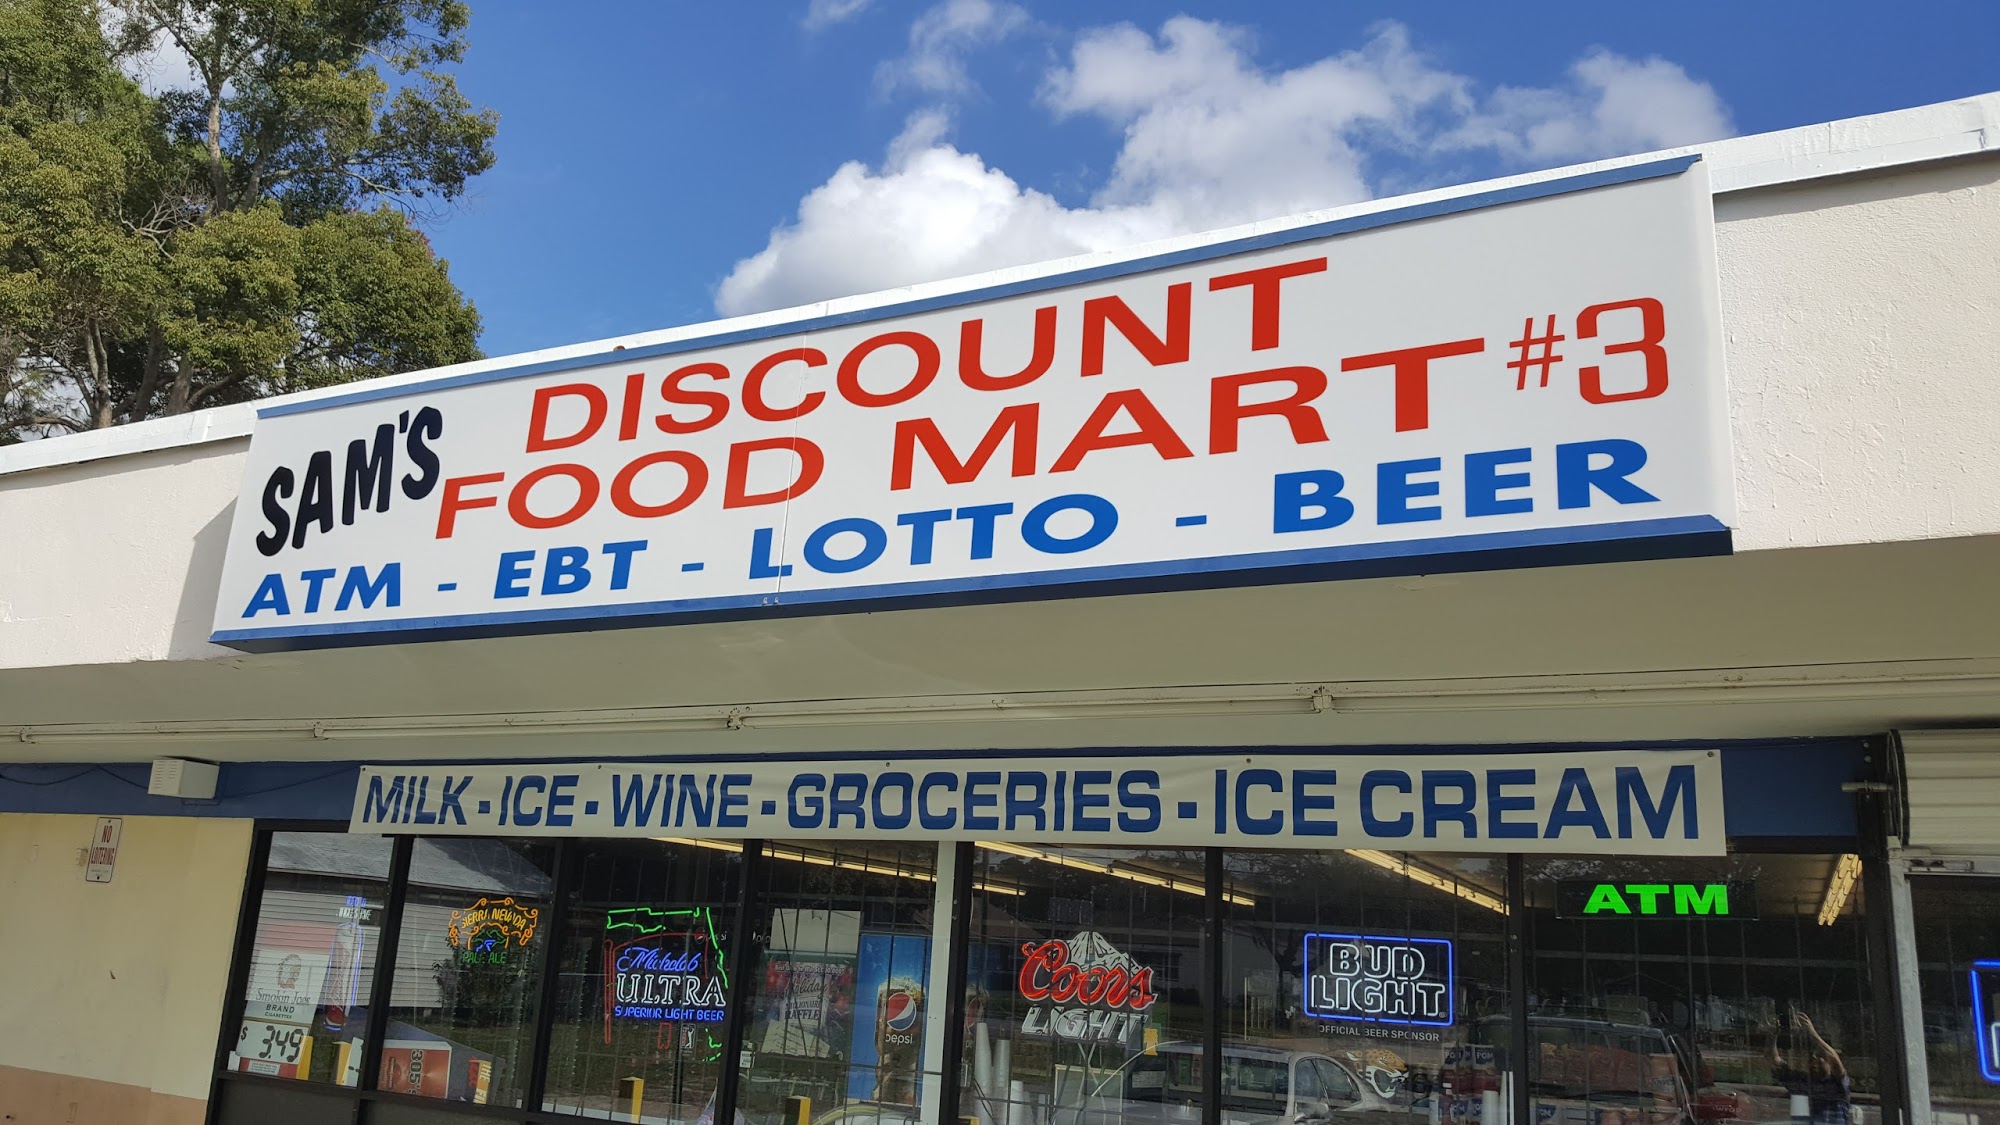 Sam's Discount Food Mart #3